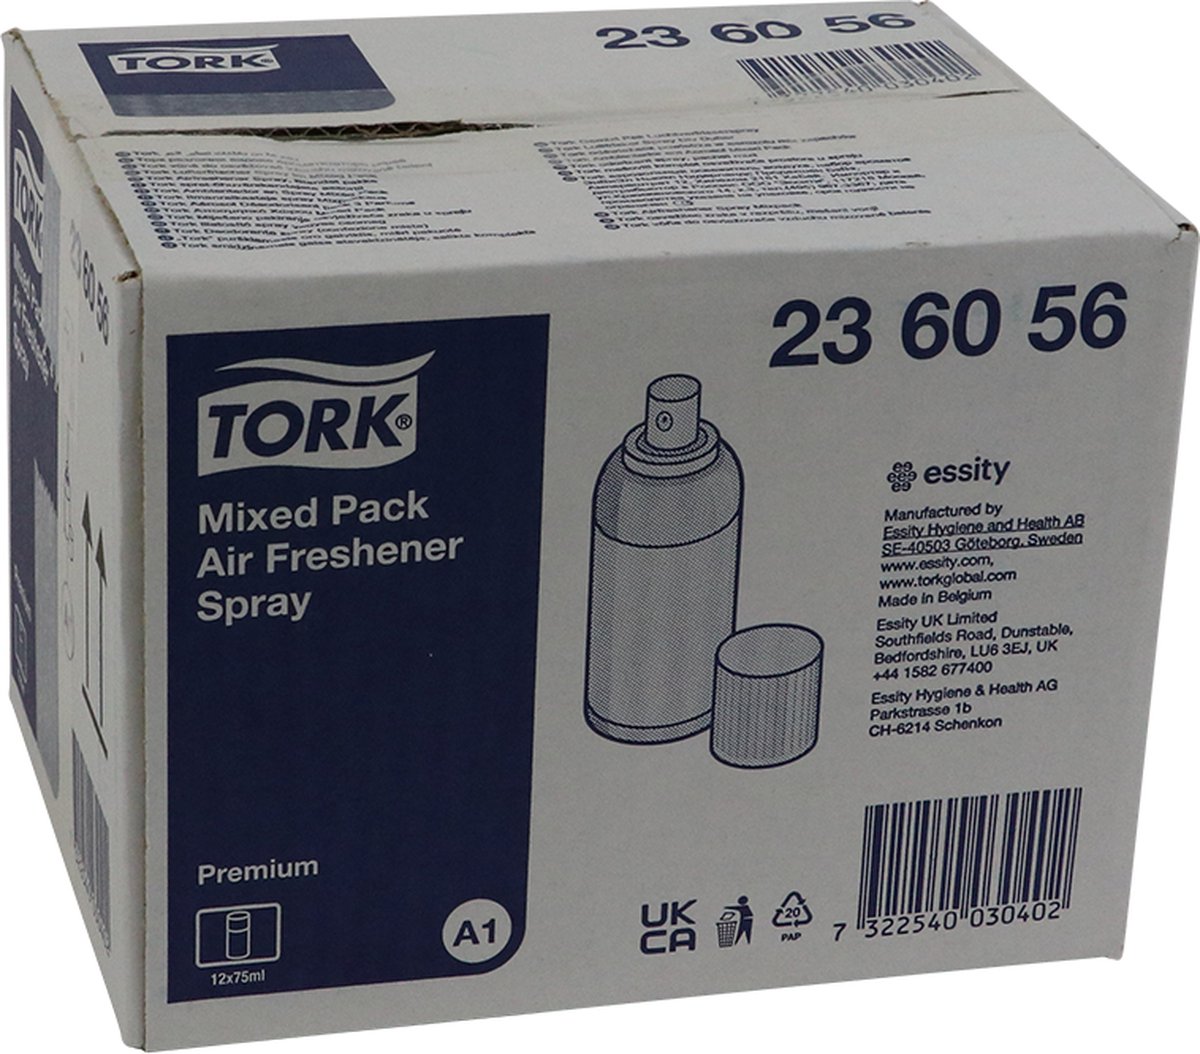 Voordeelverpakking 2 X Tork Luchtverfrisser Spray mix pakket 3 Parfums A1, aerosol, 12x75ml (236056)